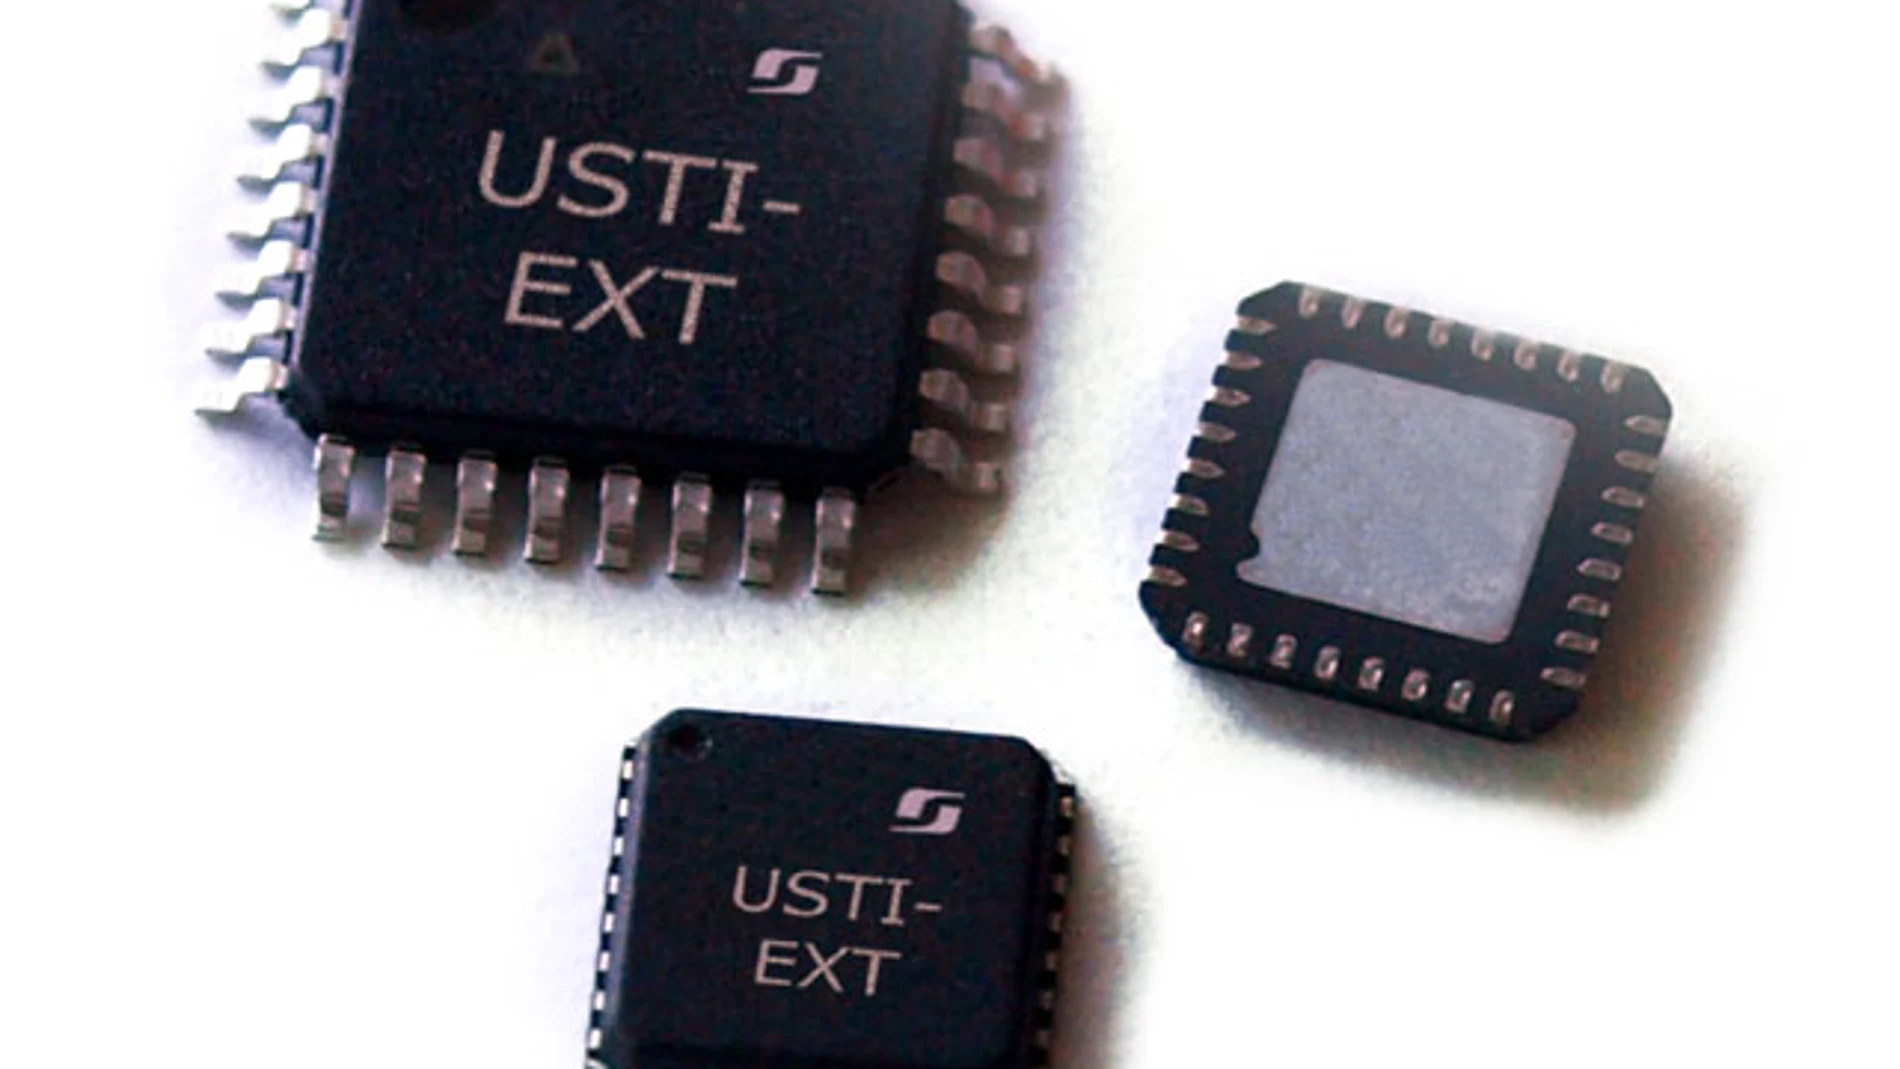 Universal Sensors and Transducers Interface (USTI-EXT), dispositivo creado por la startup tecnológica española Excelora.